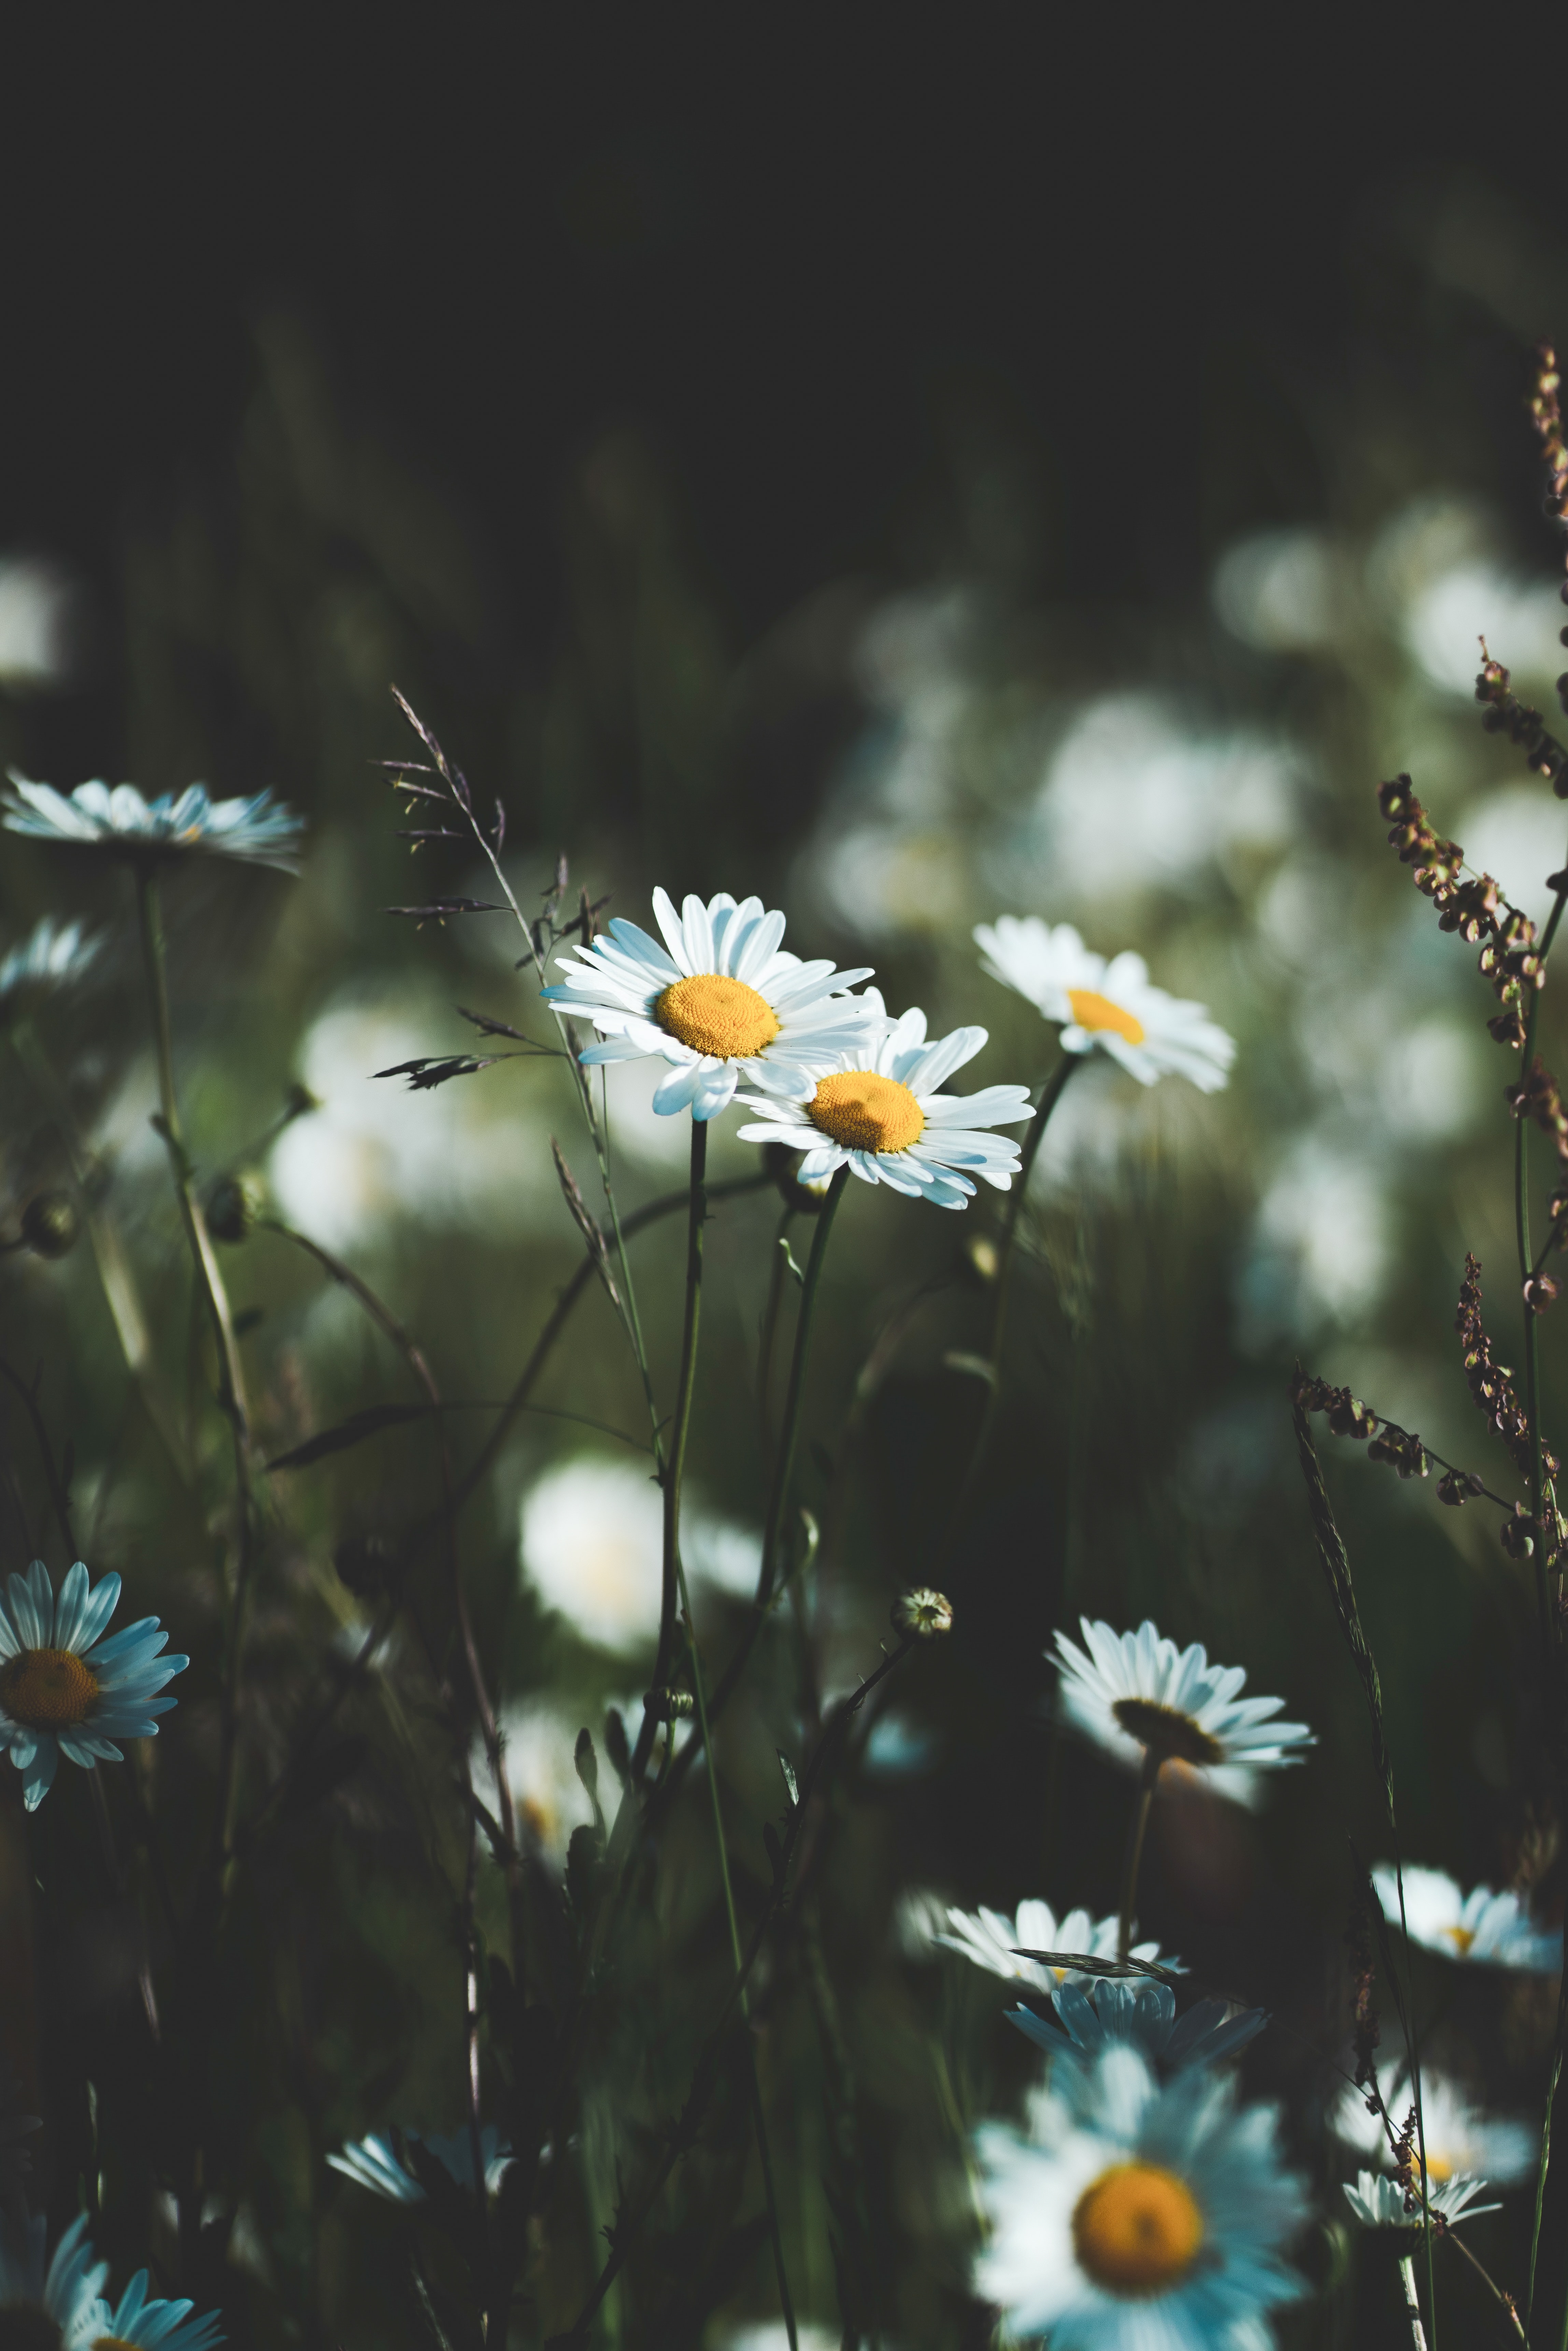 wildflowers, flowers, grass, camomile